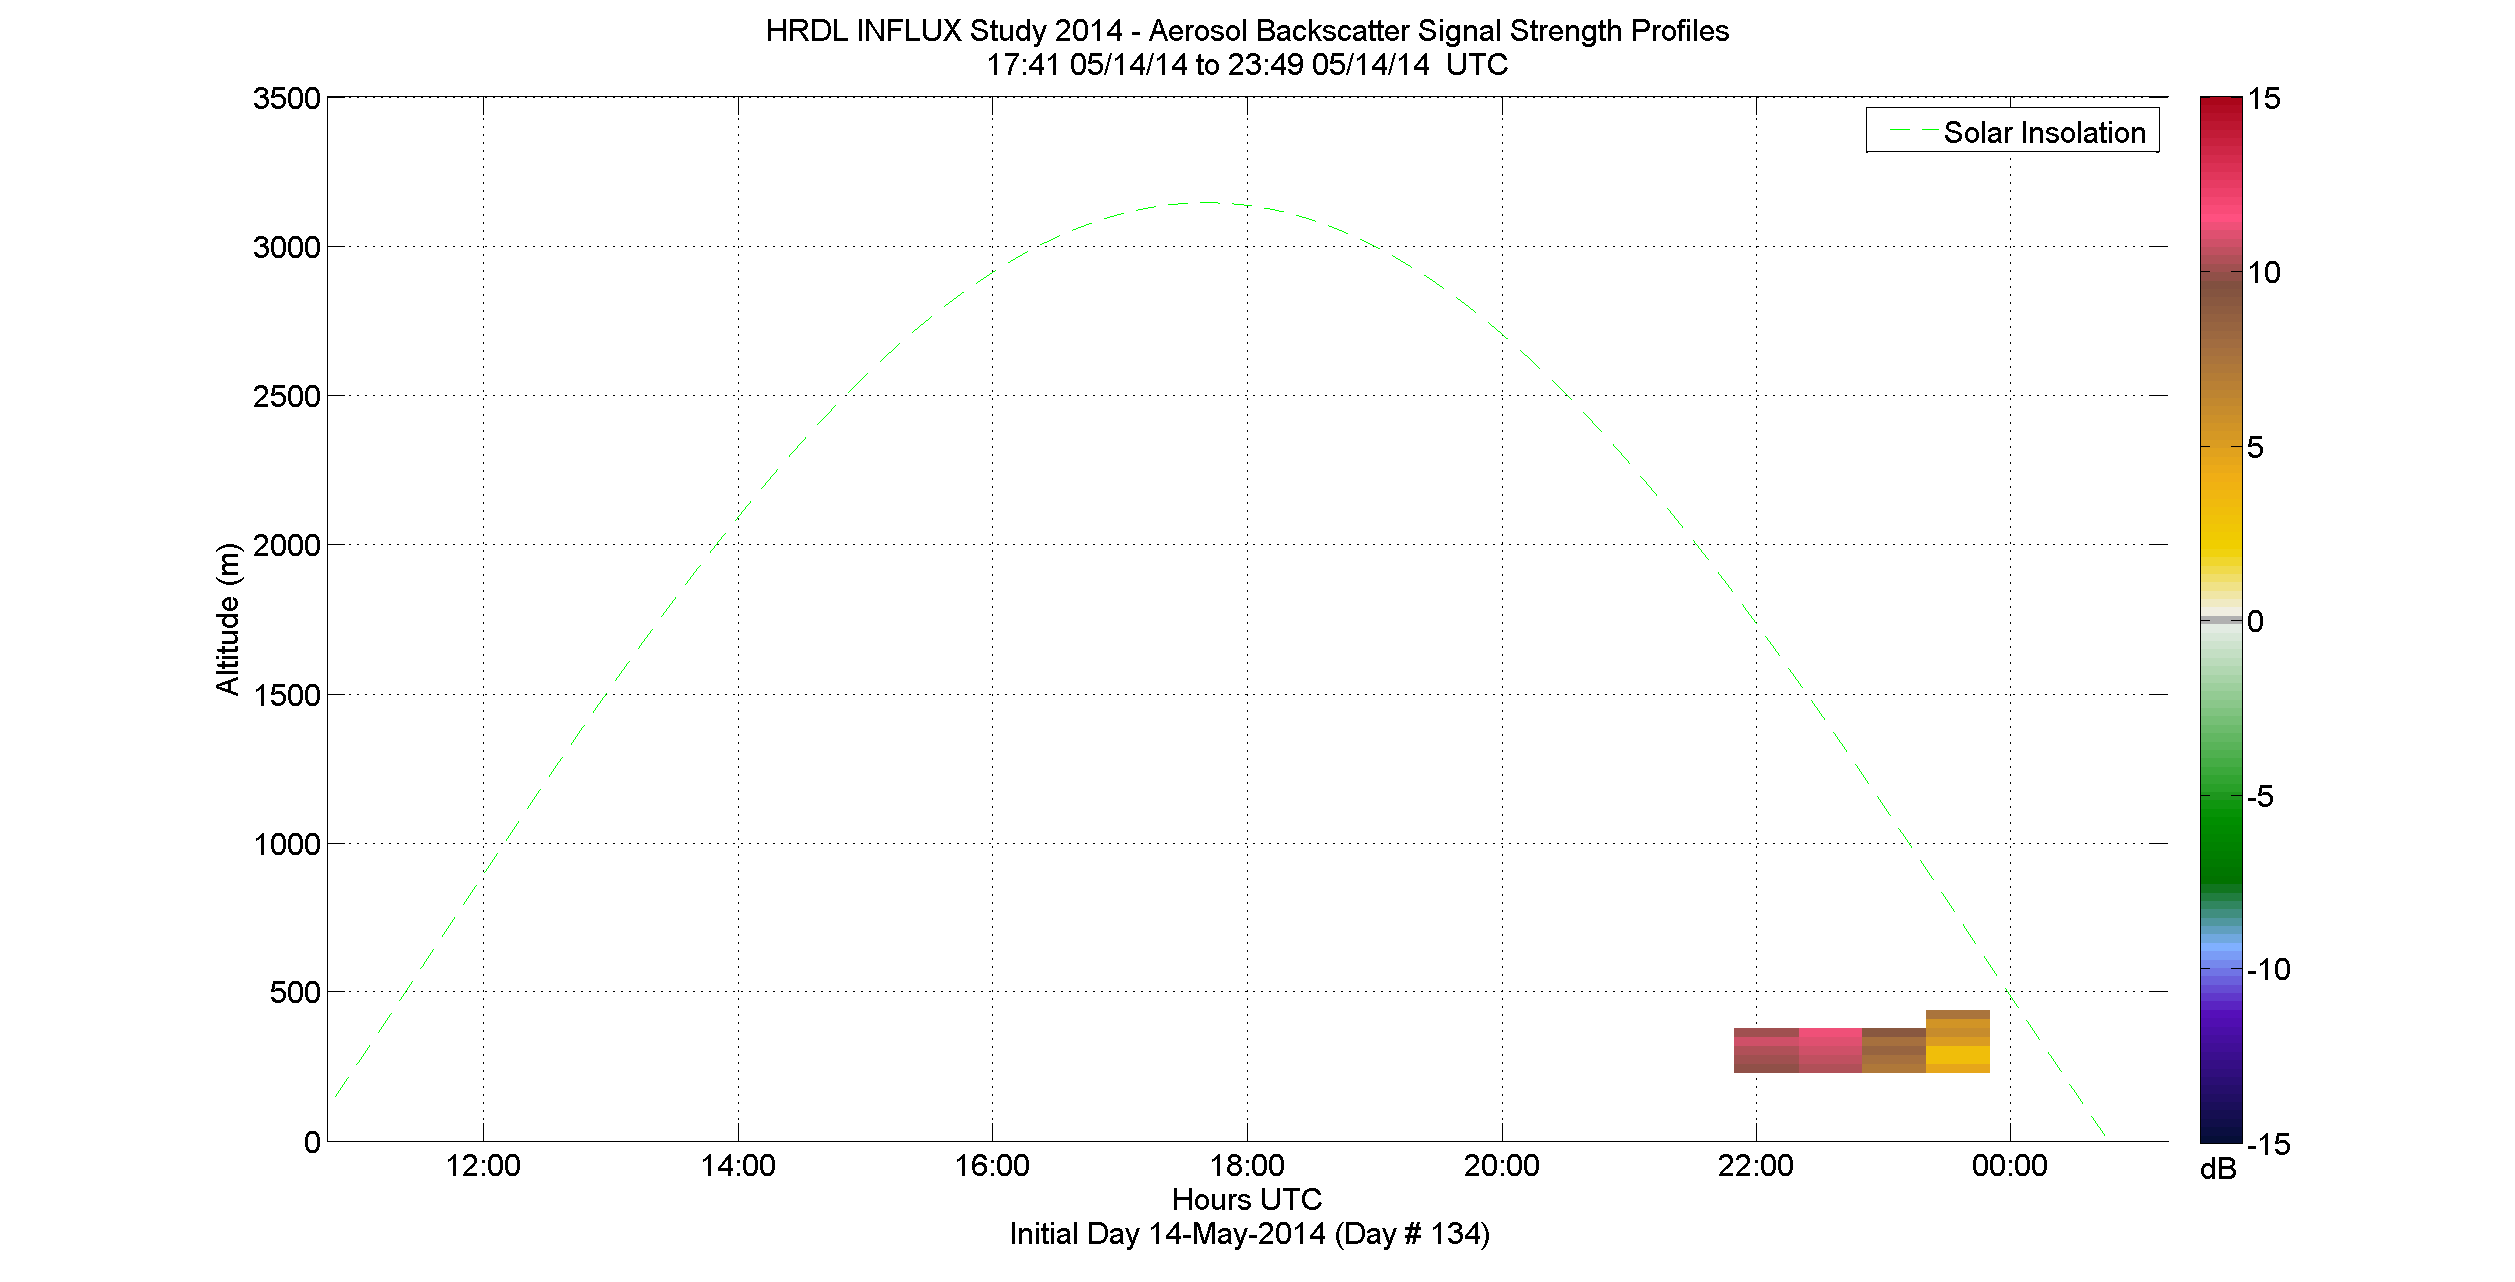 HRDL aerosol backscatter signal strength profile - May 14 pm